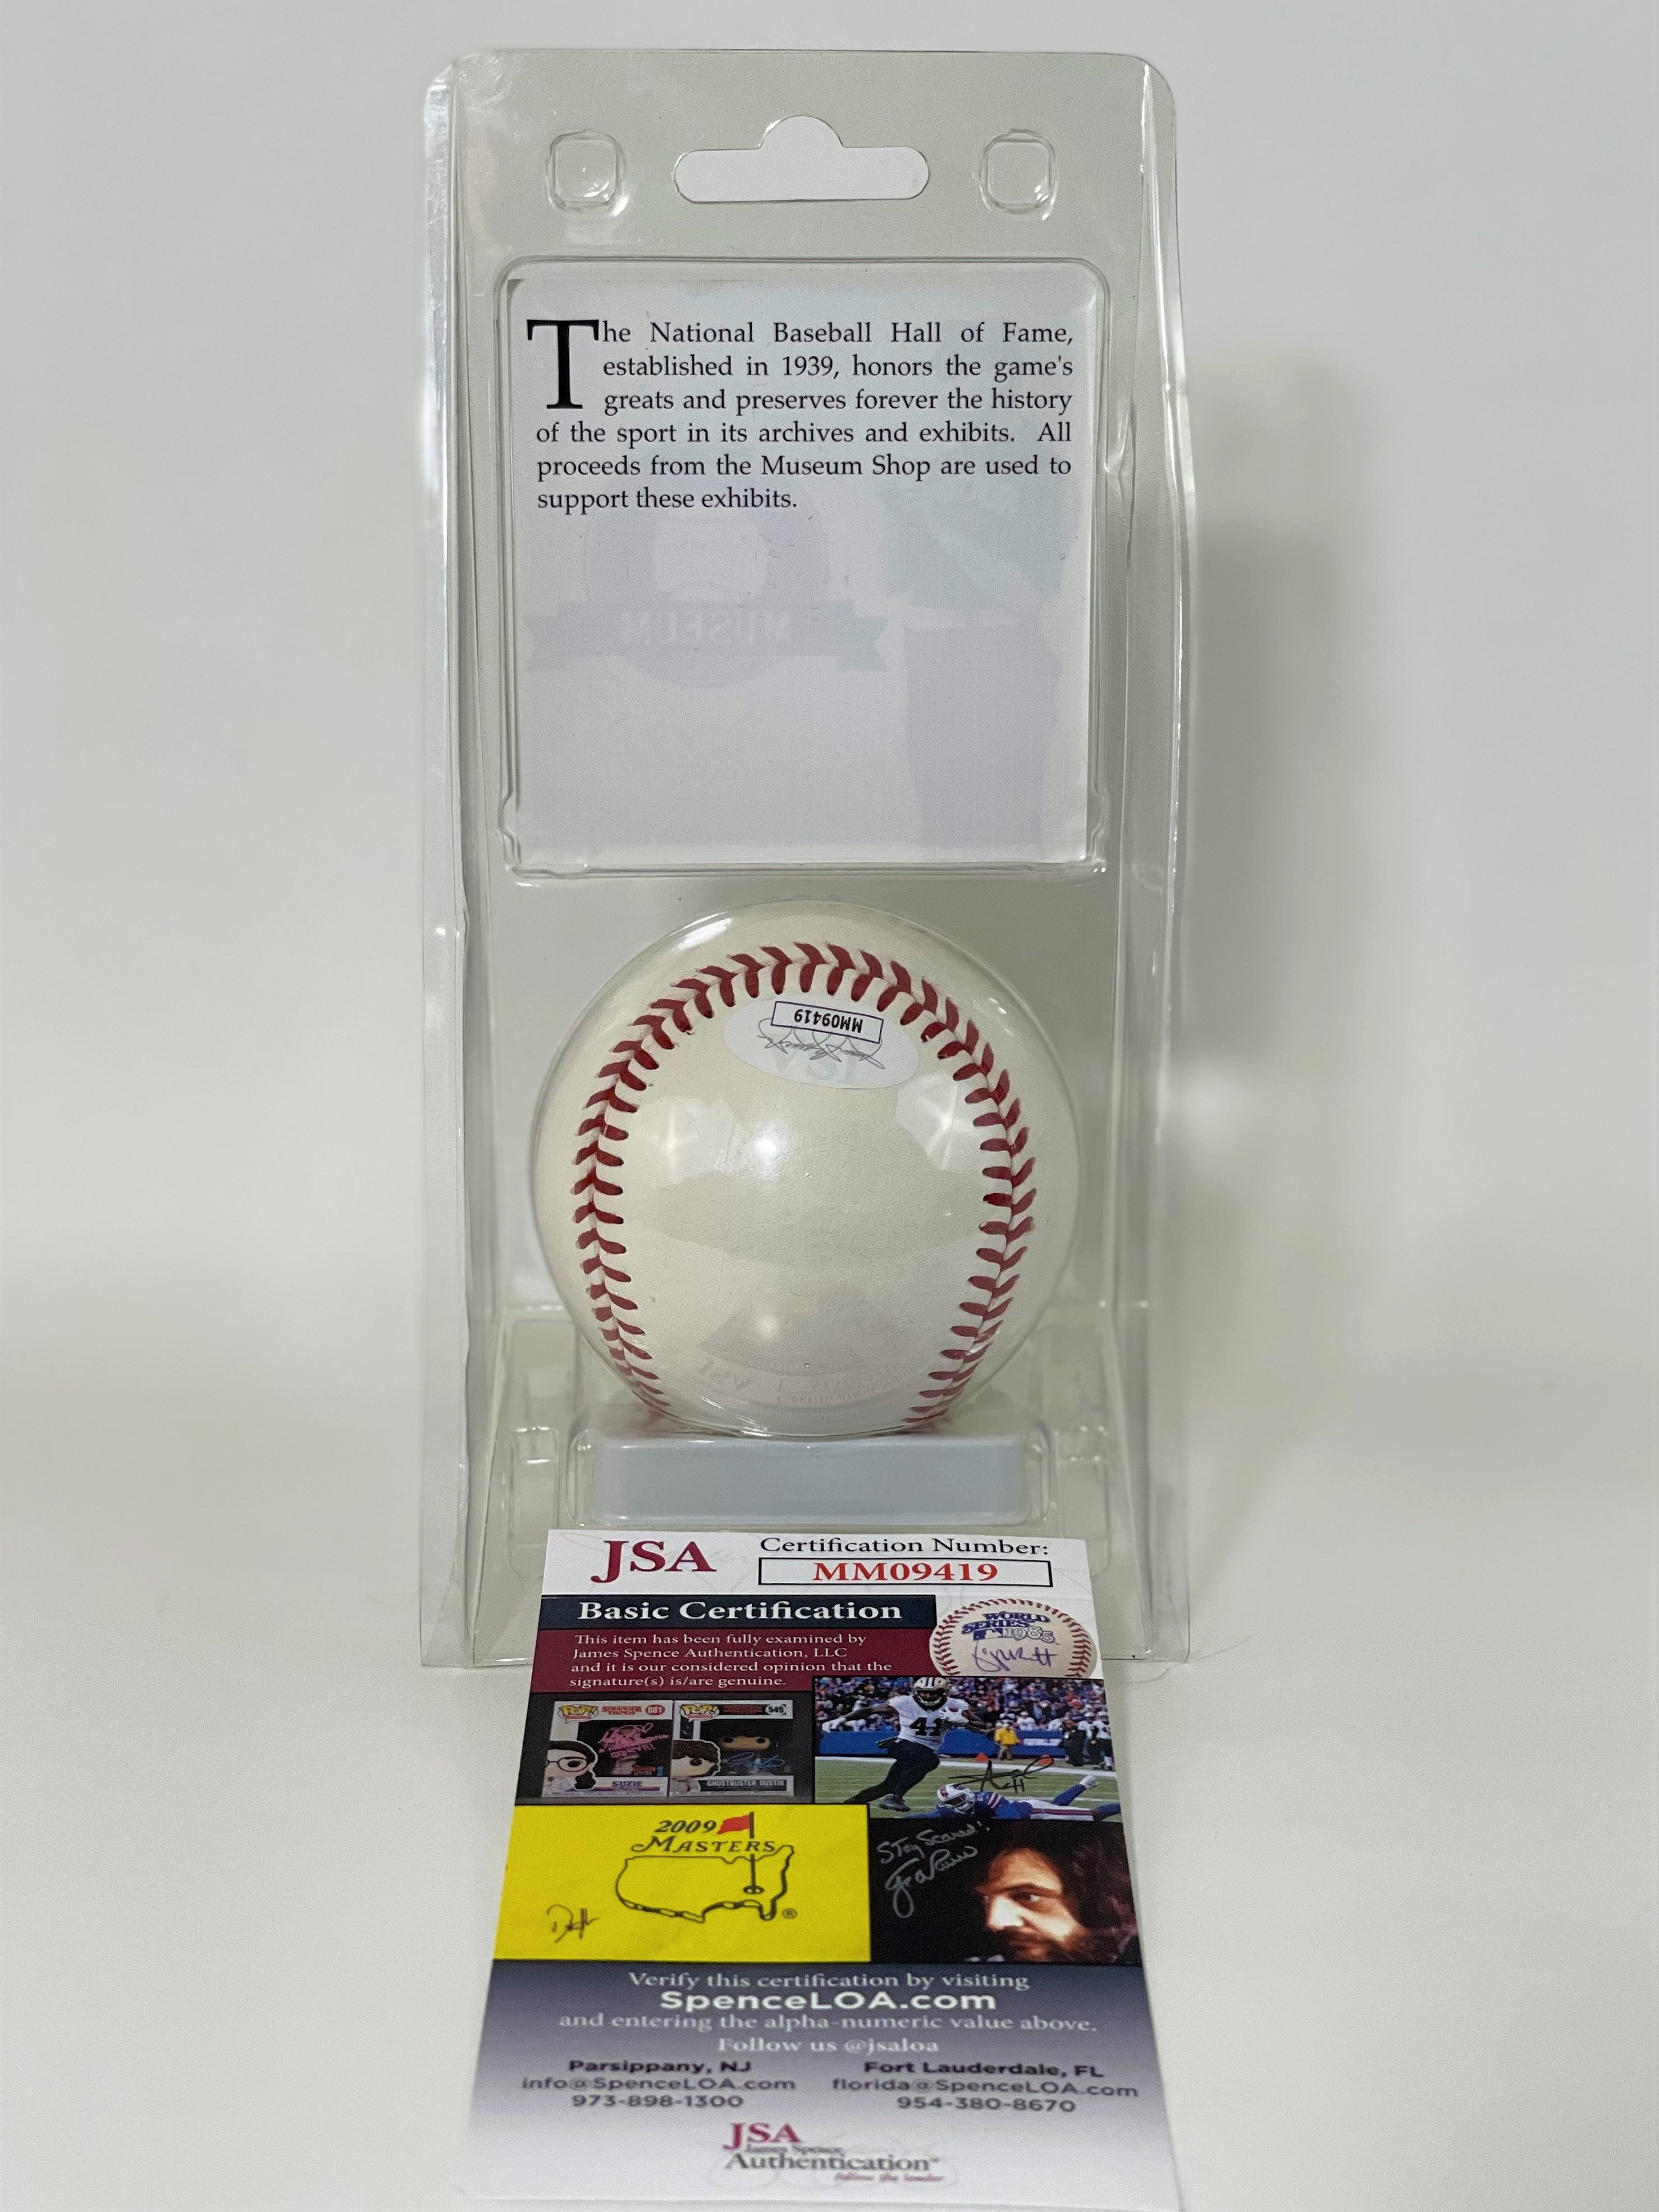 Tony Gwynn Signed Hall of Fame Logo Baseball (JSA COA) – GSSM